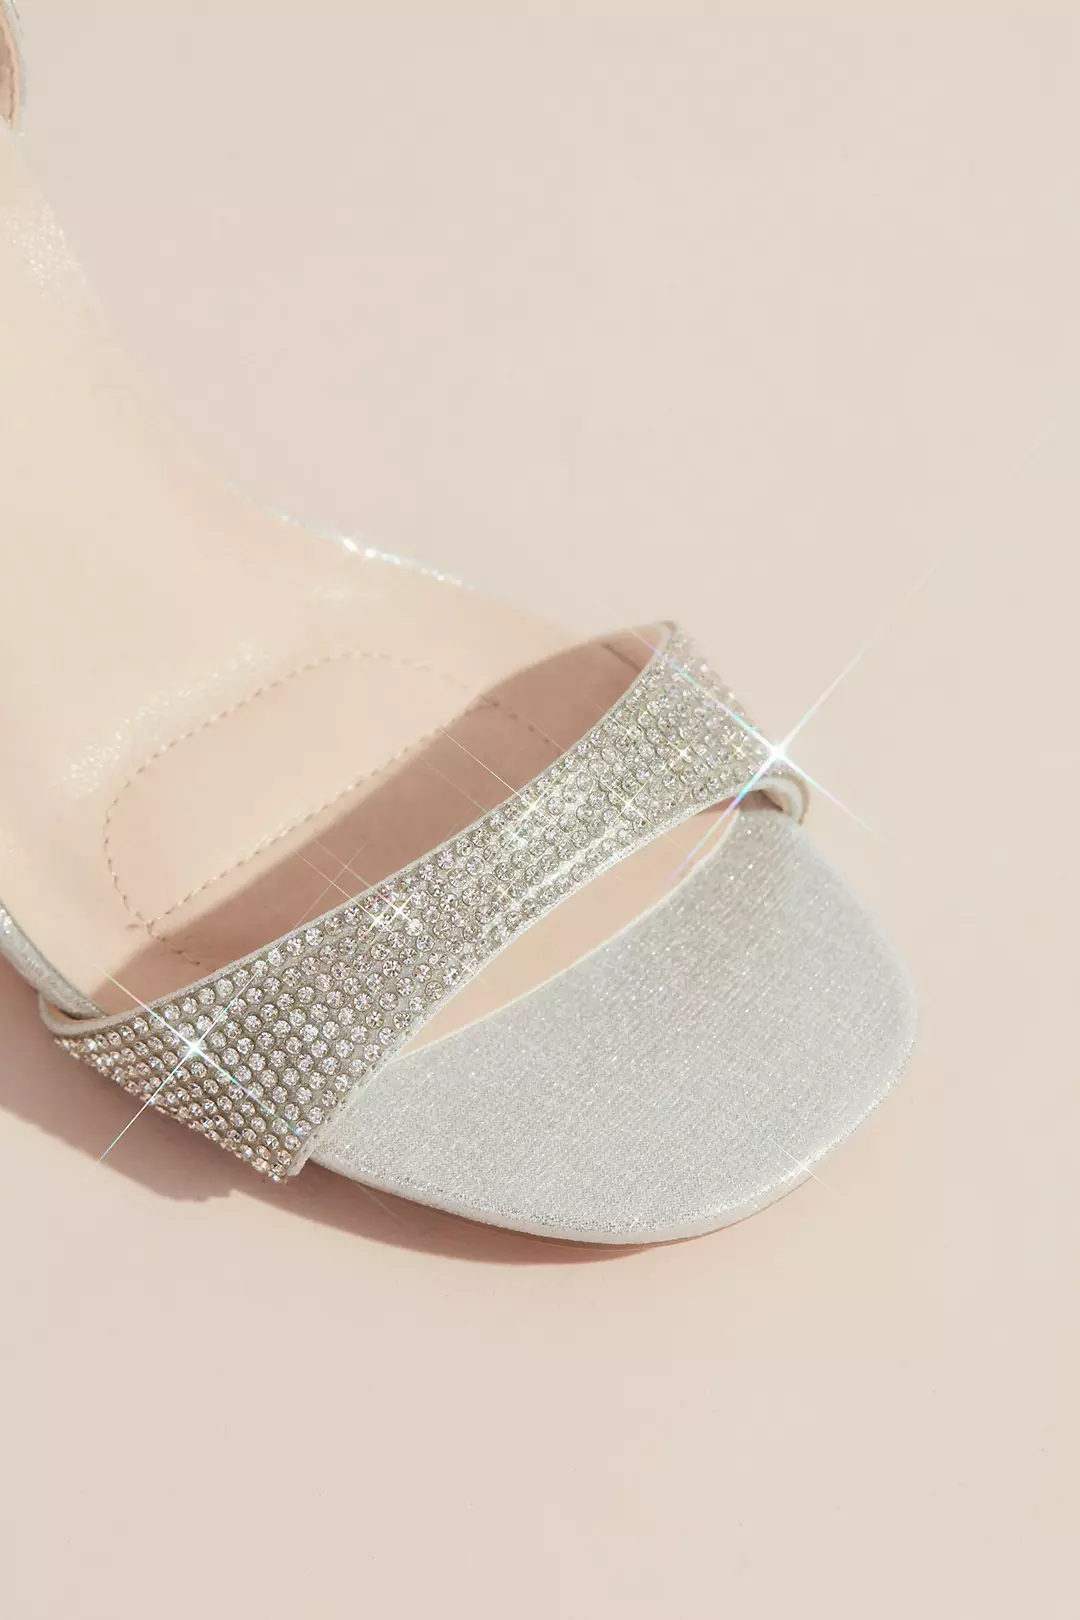 Sparkly Minimalist Ankle Strap Block Heel Sandals Image 3